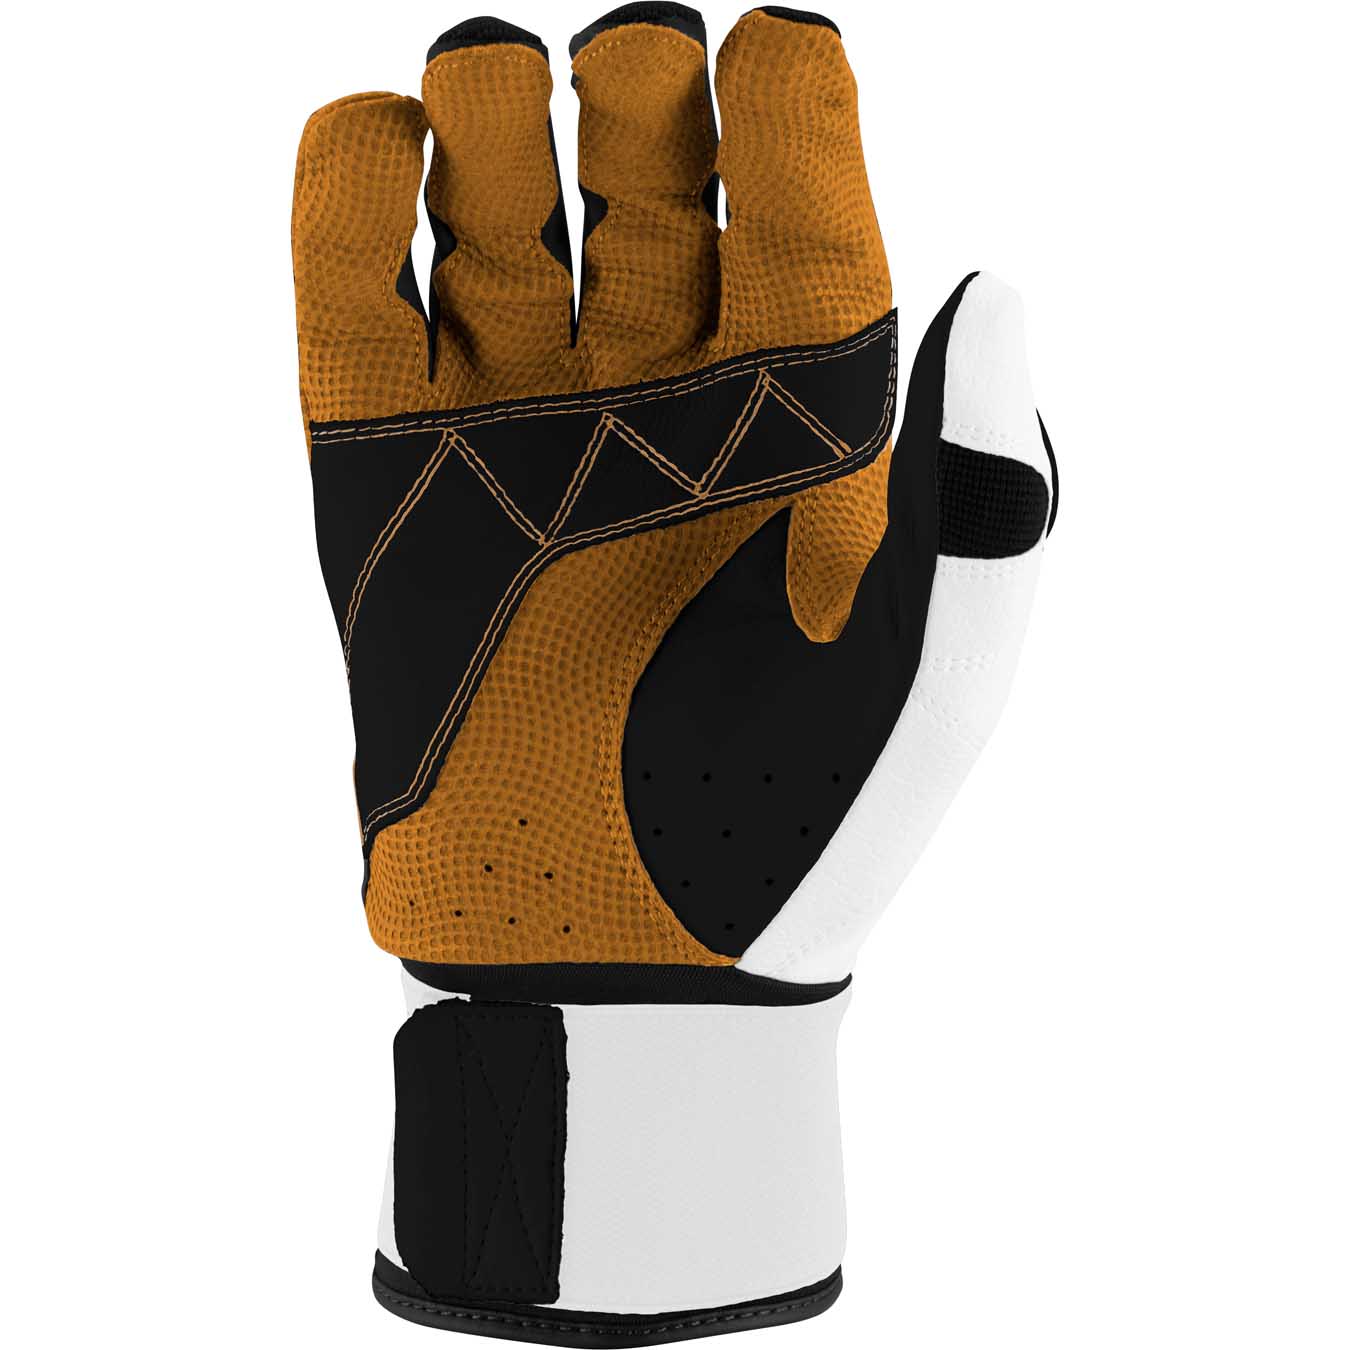 Marucci Blacksmith 2 Full Wrap Batting Gloves